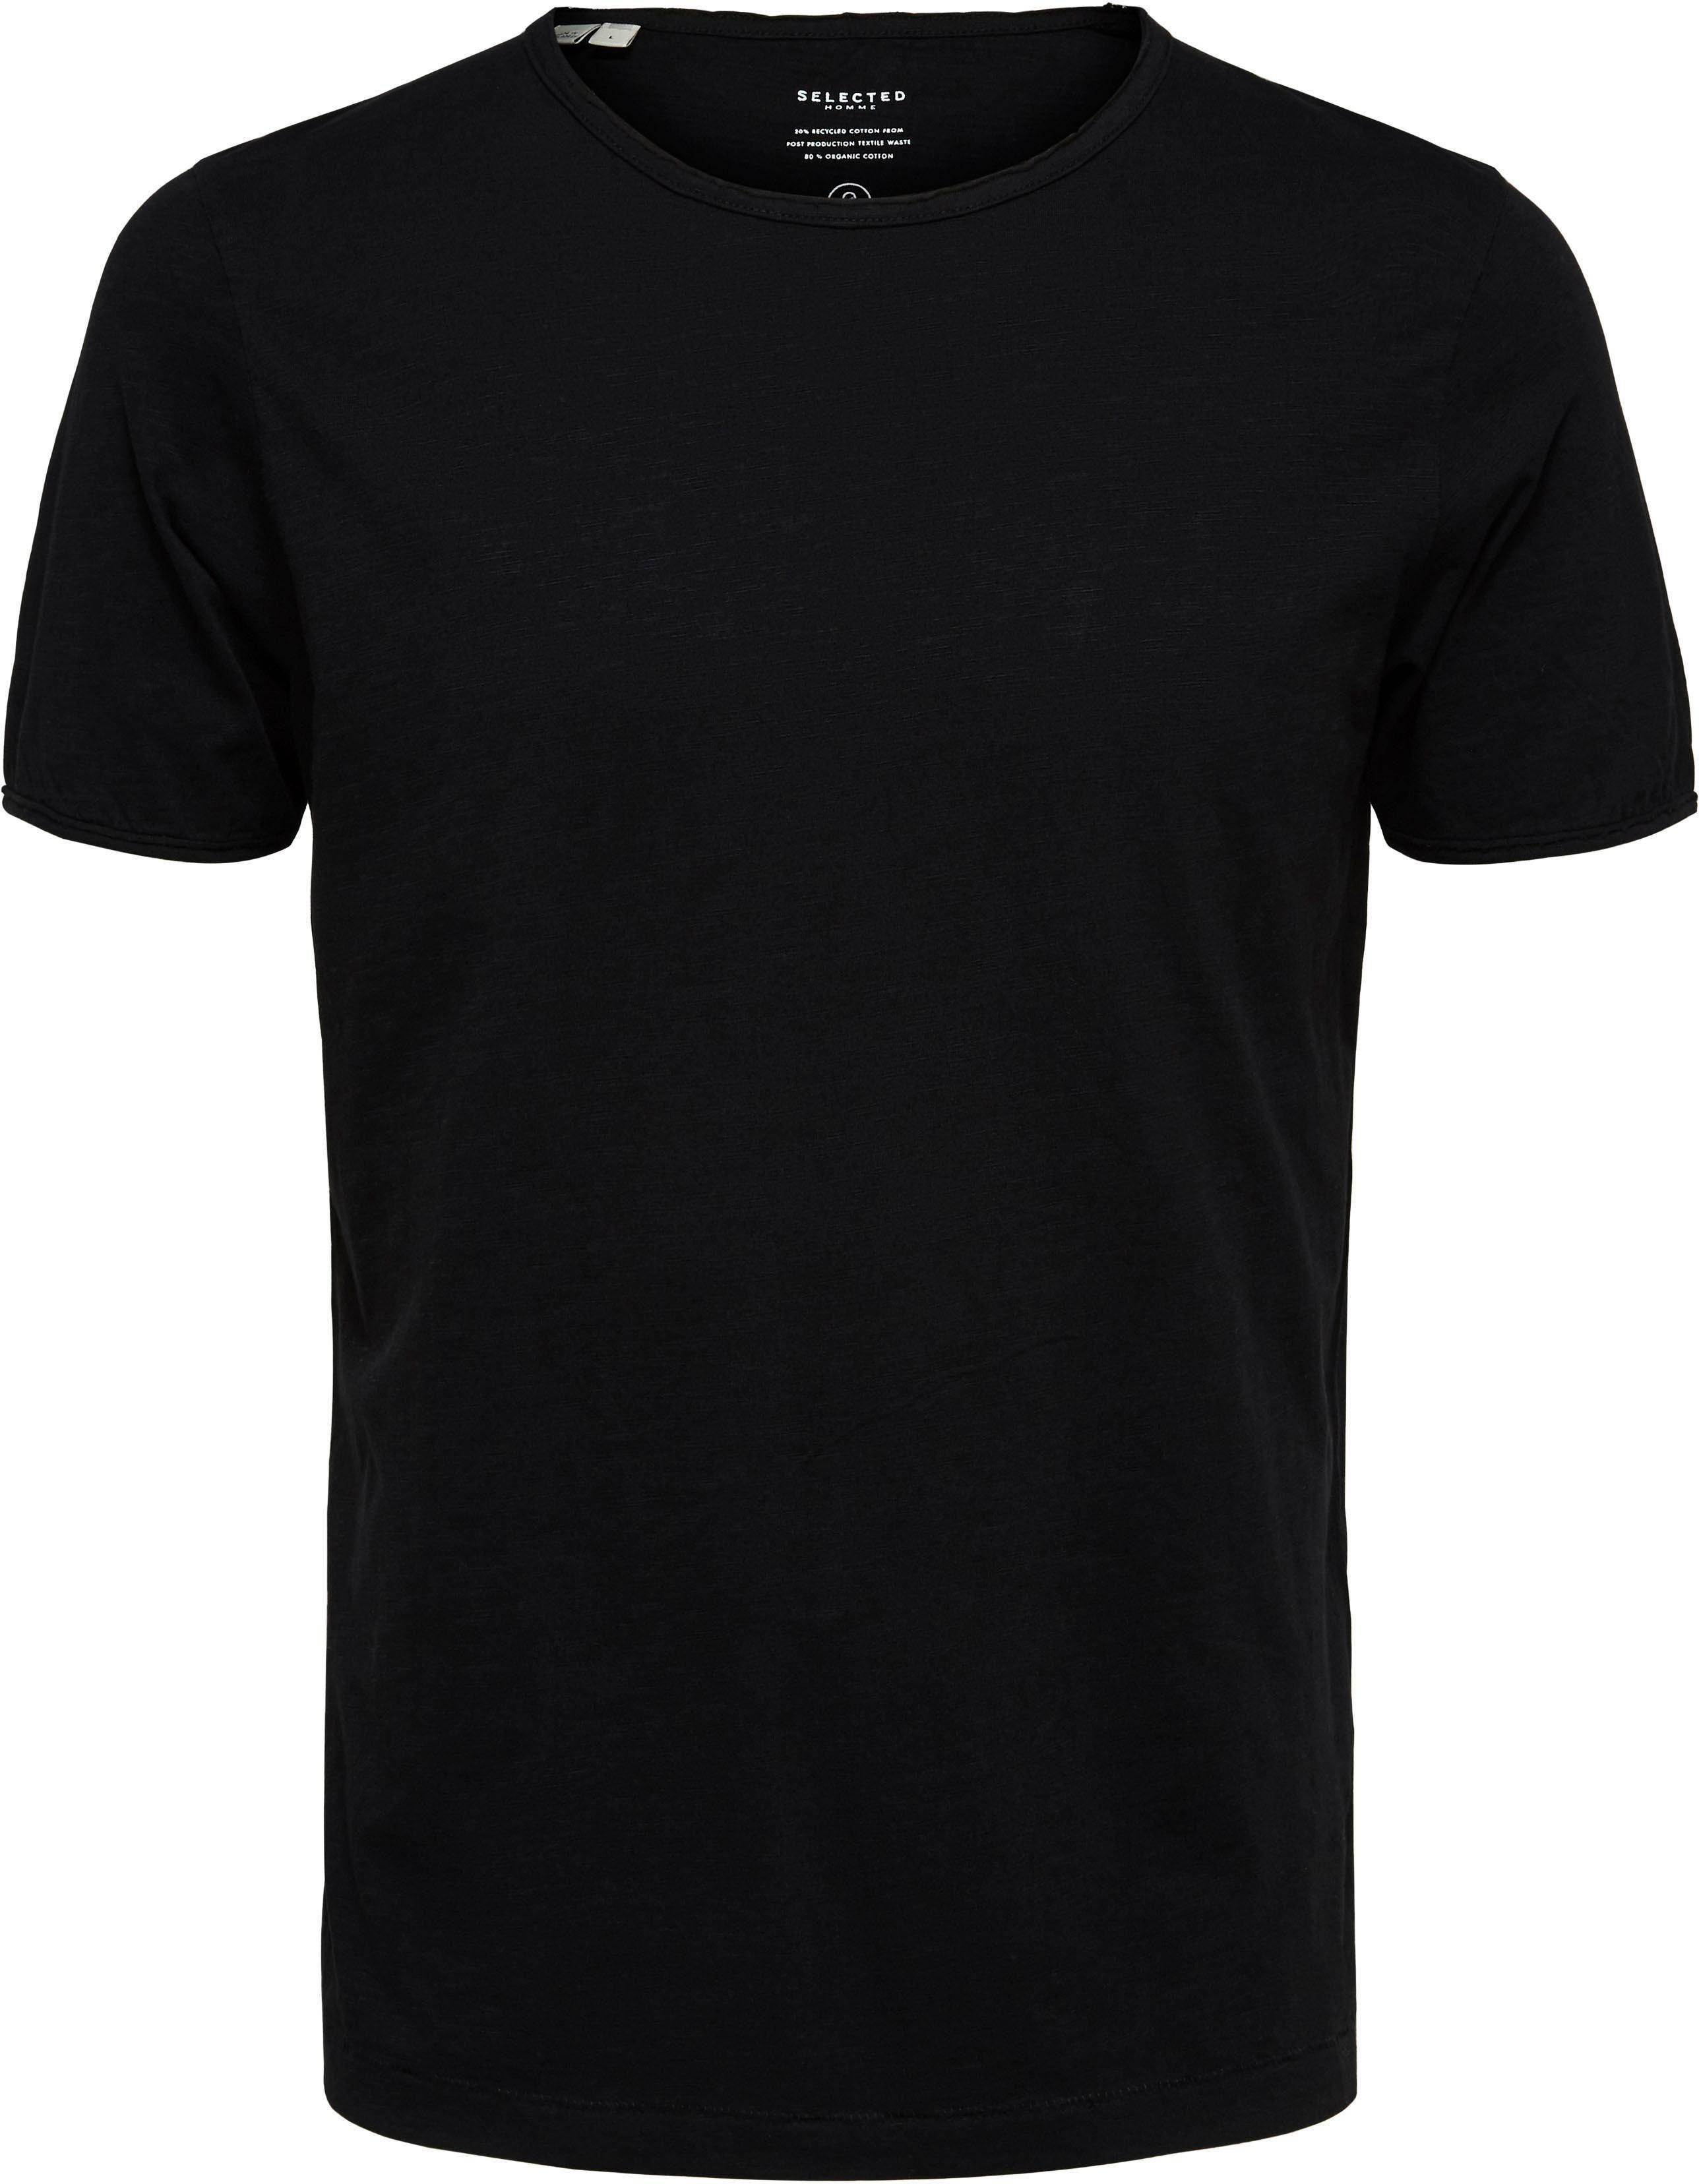 SELECTED HOMME T-Shirt MORGAN O-NECK TEE Black